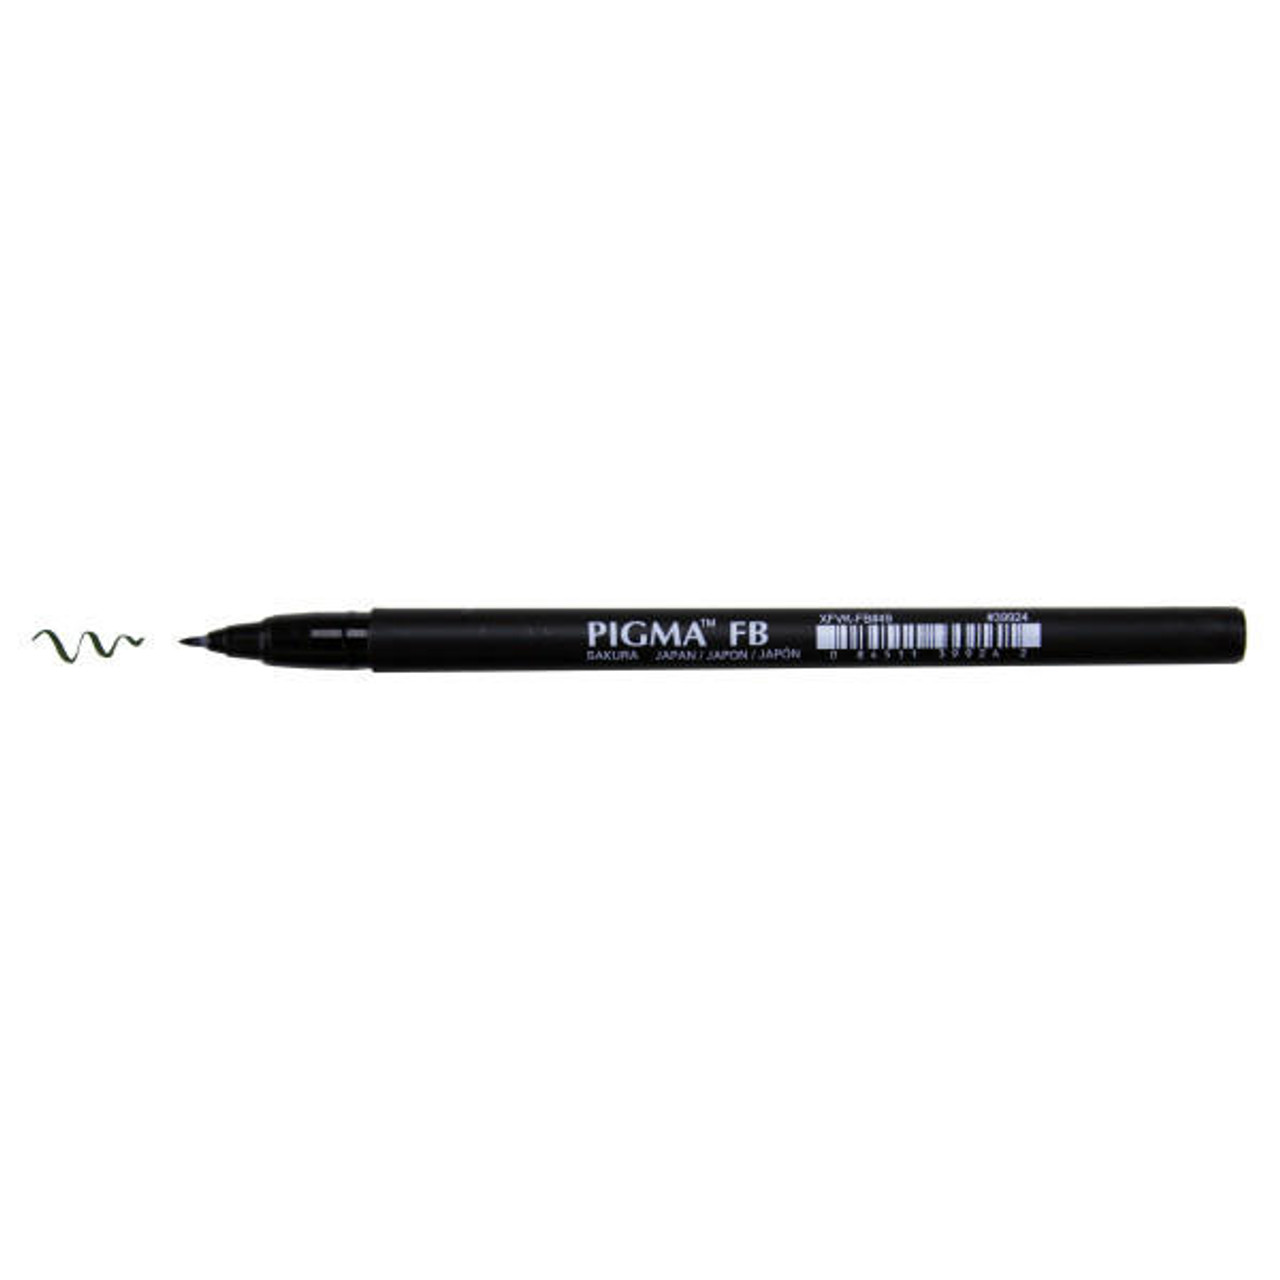 Sakura Pigma Micron Pen Sets - FLAX art & design